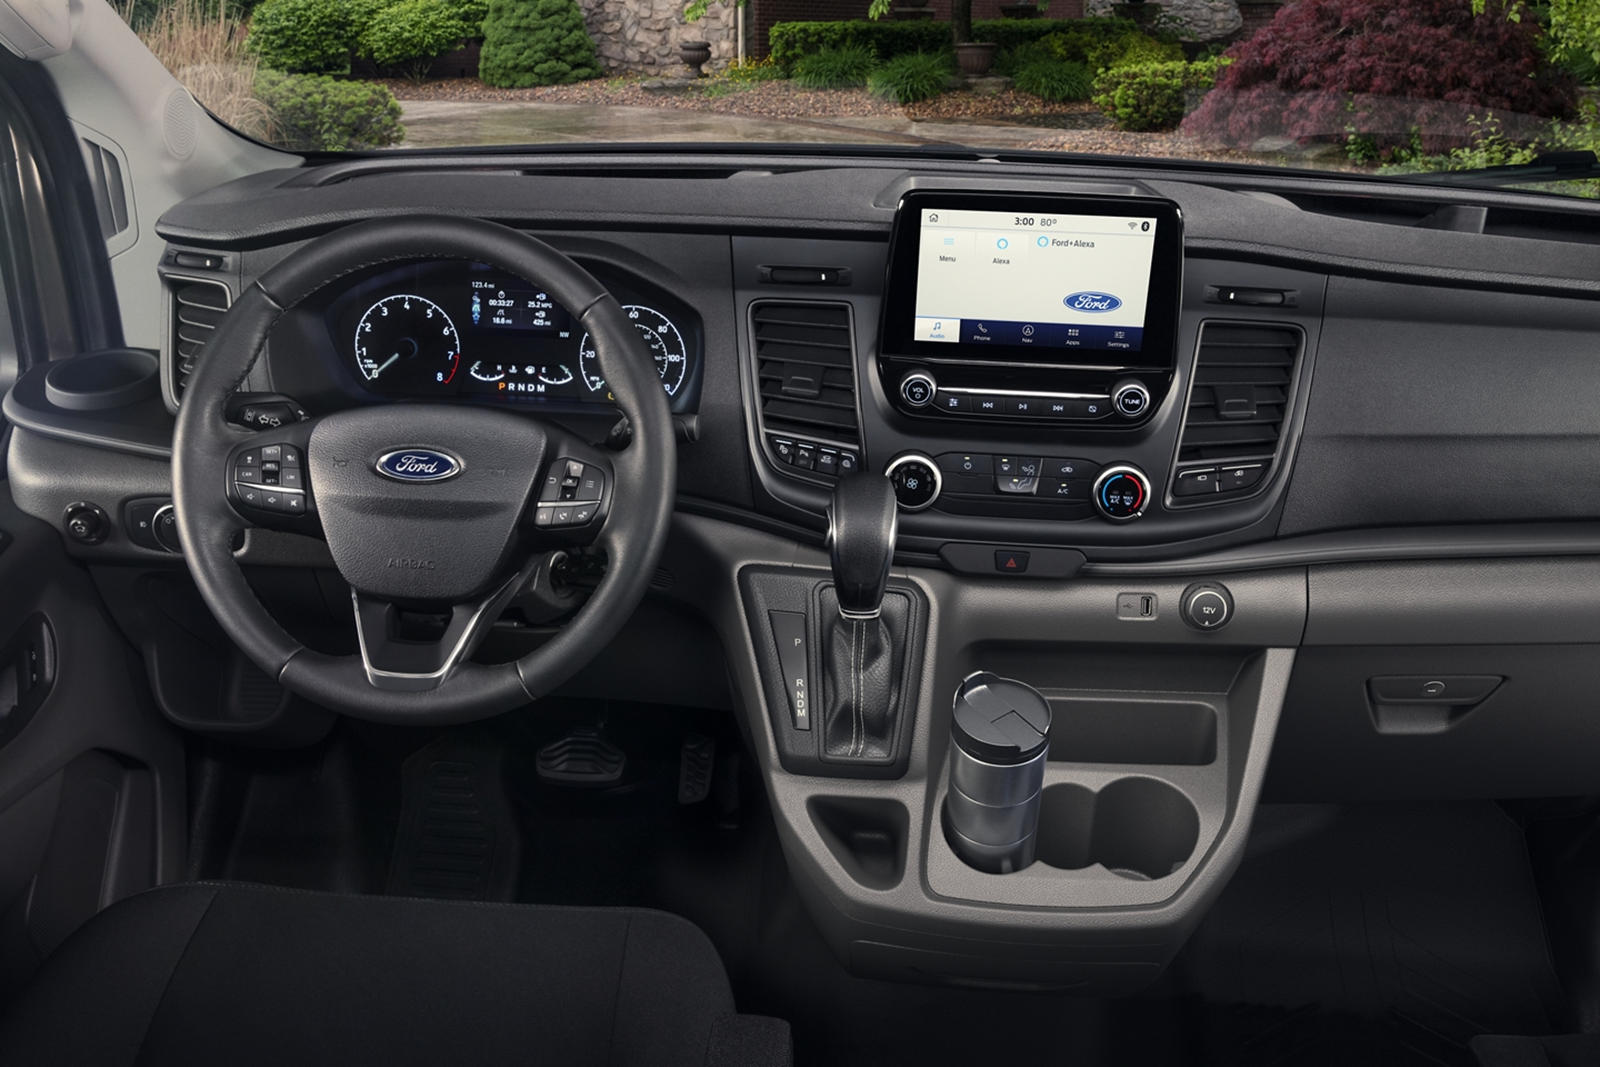 Ford Tourneo interior - Cockpit